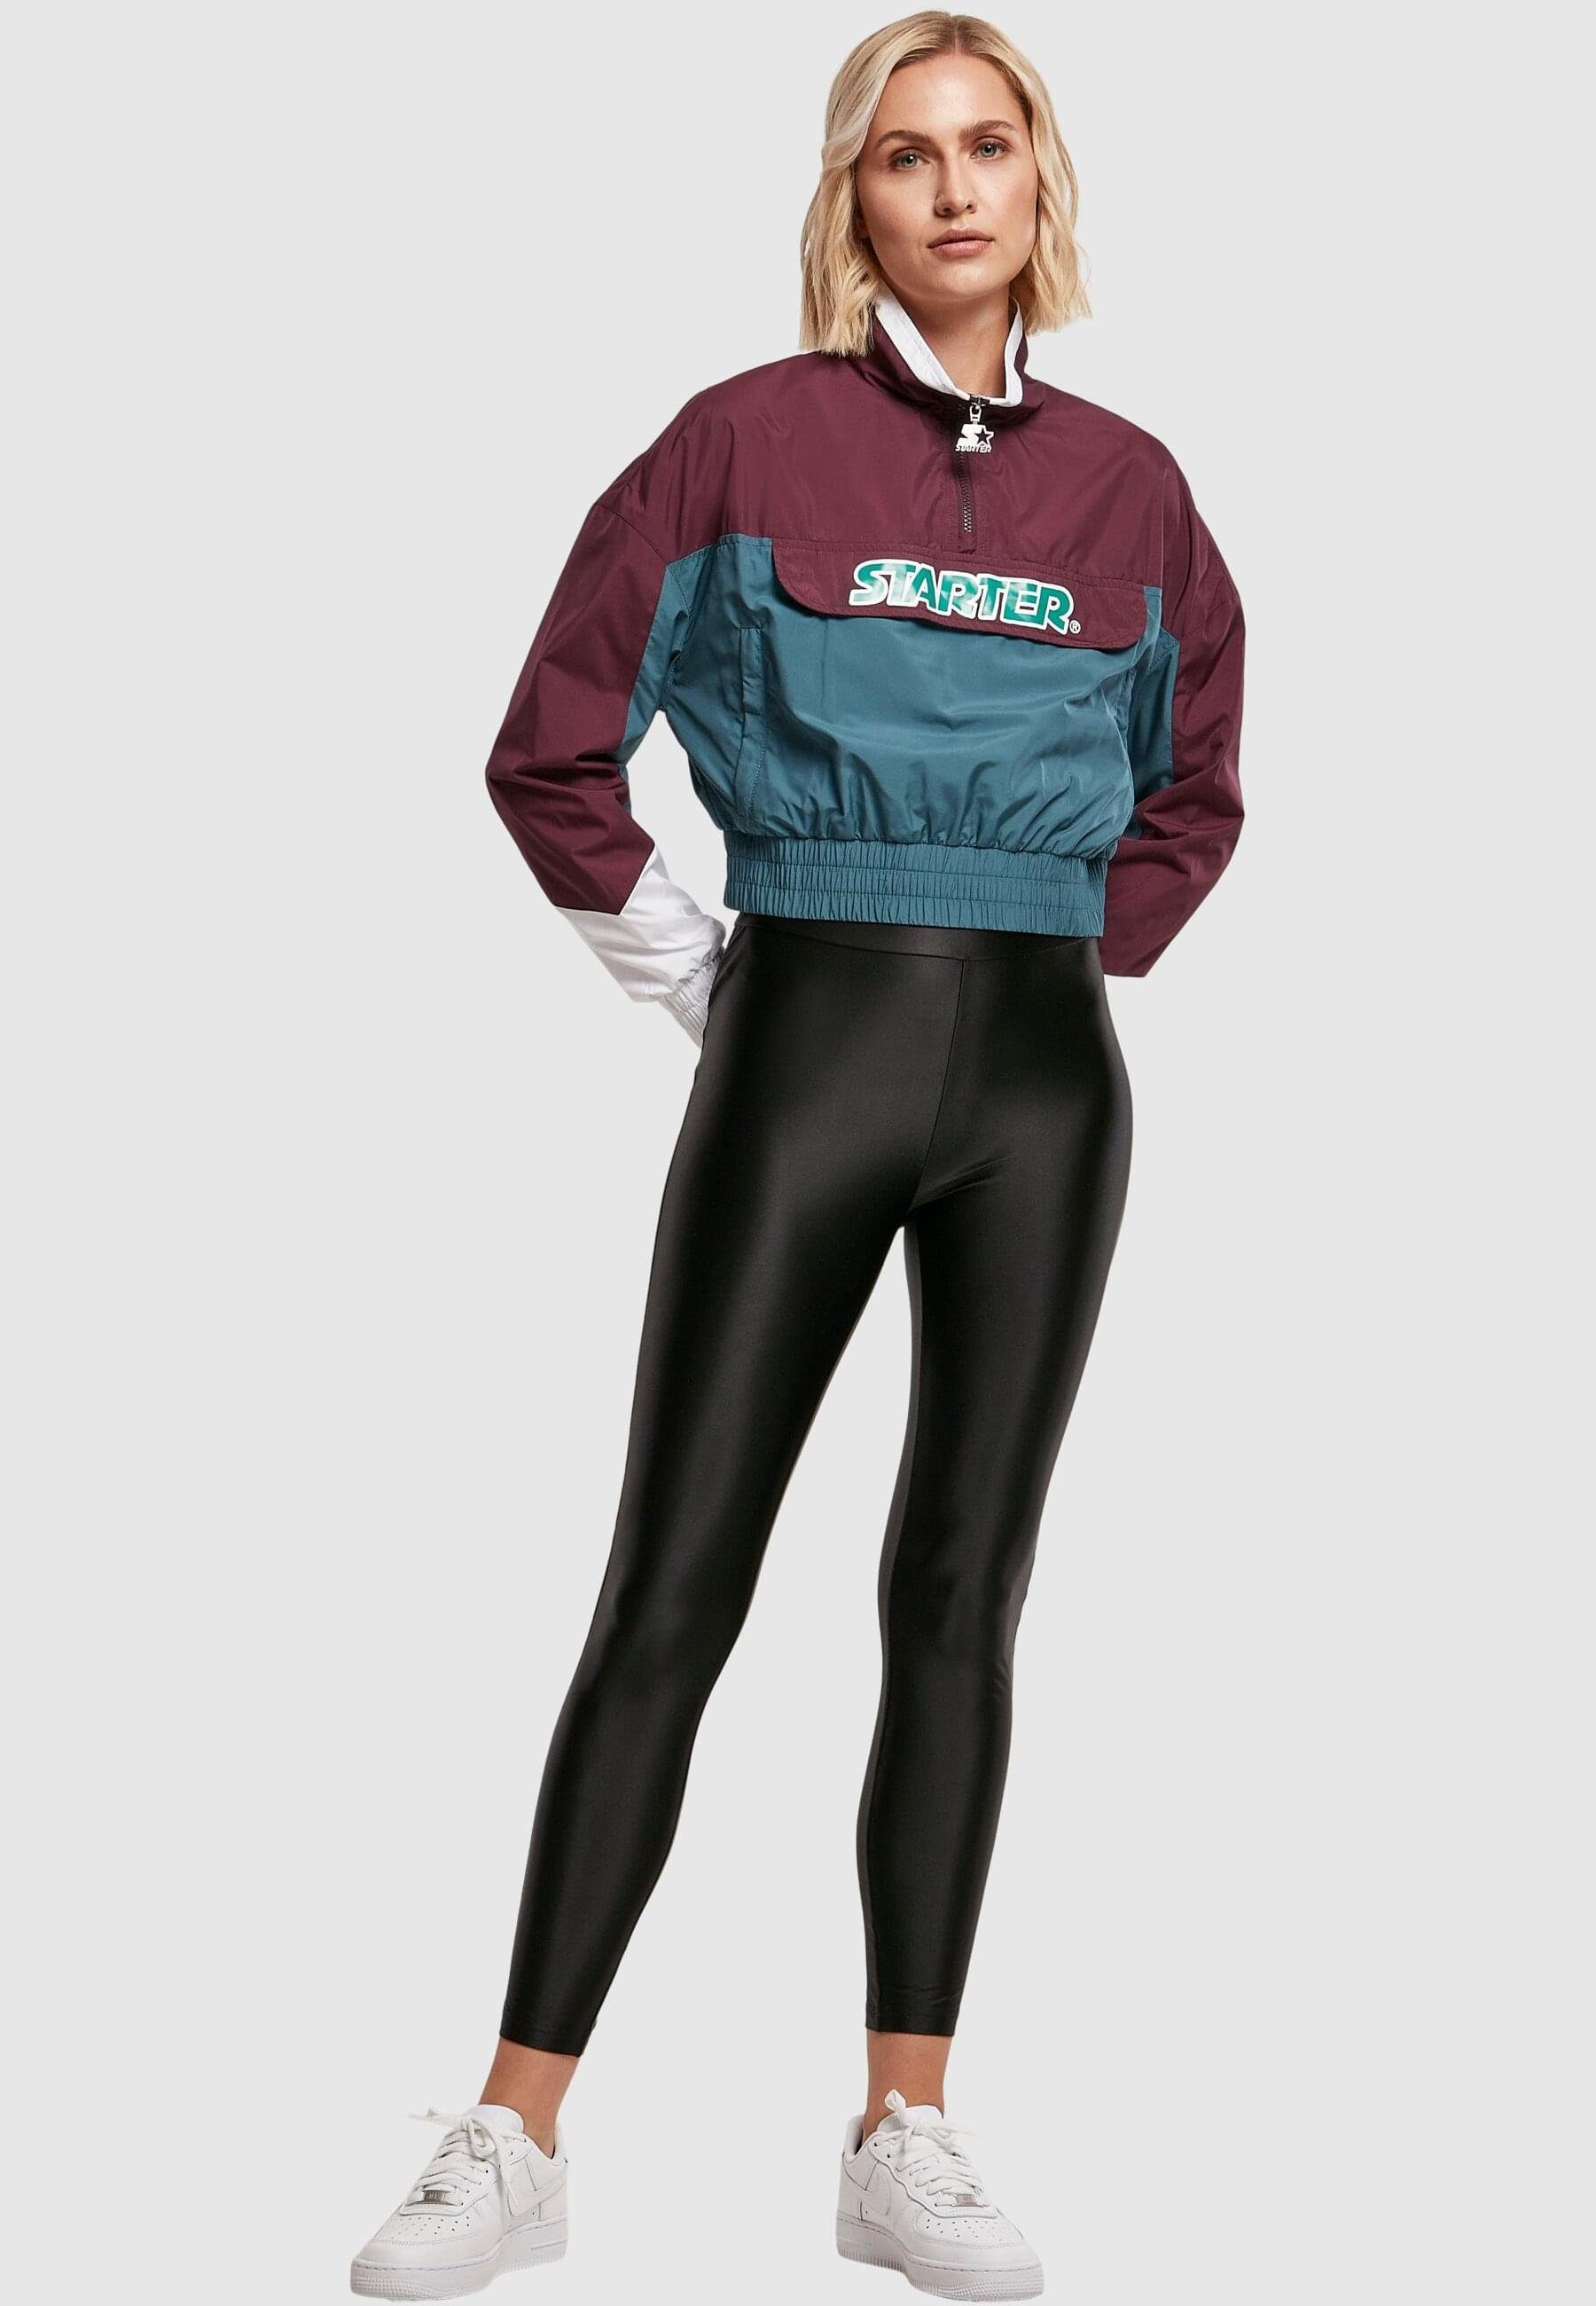 (1-St) Starter Damen Colorblock Label Pull Outdoorjacke darkviolet/teal Starter Black Jacket Ladies Over